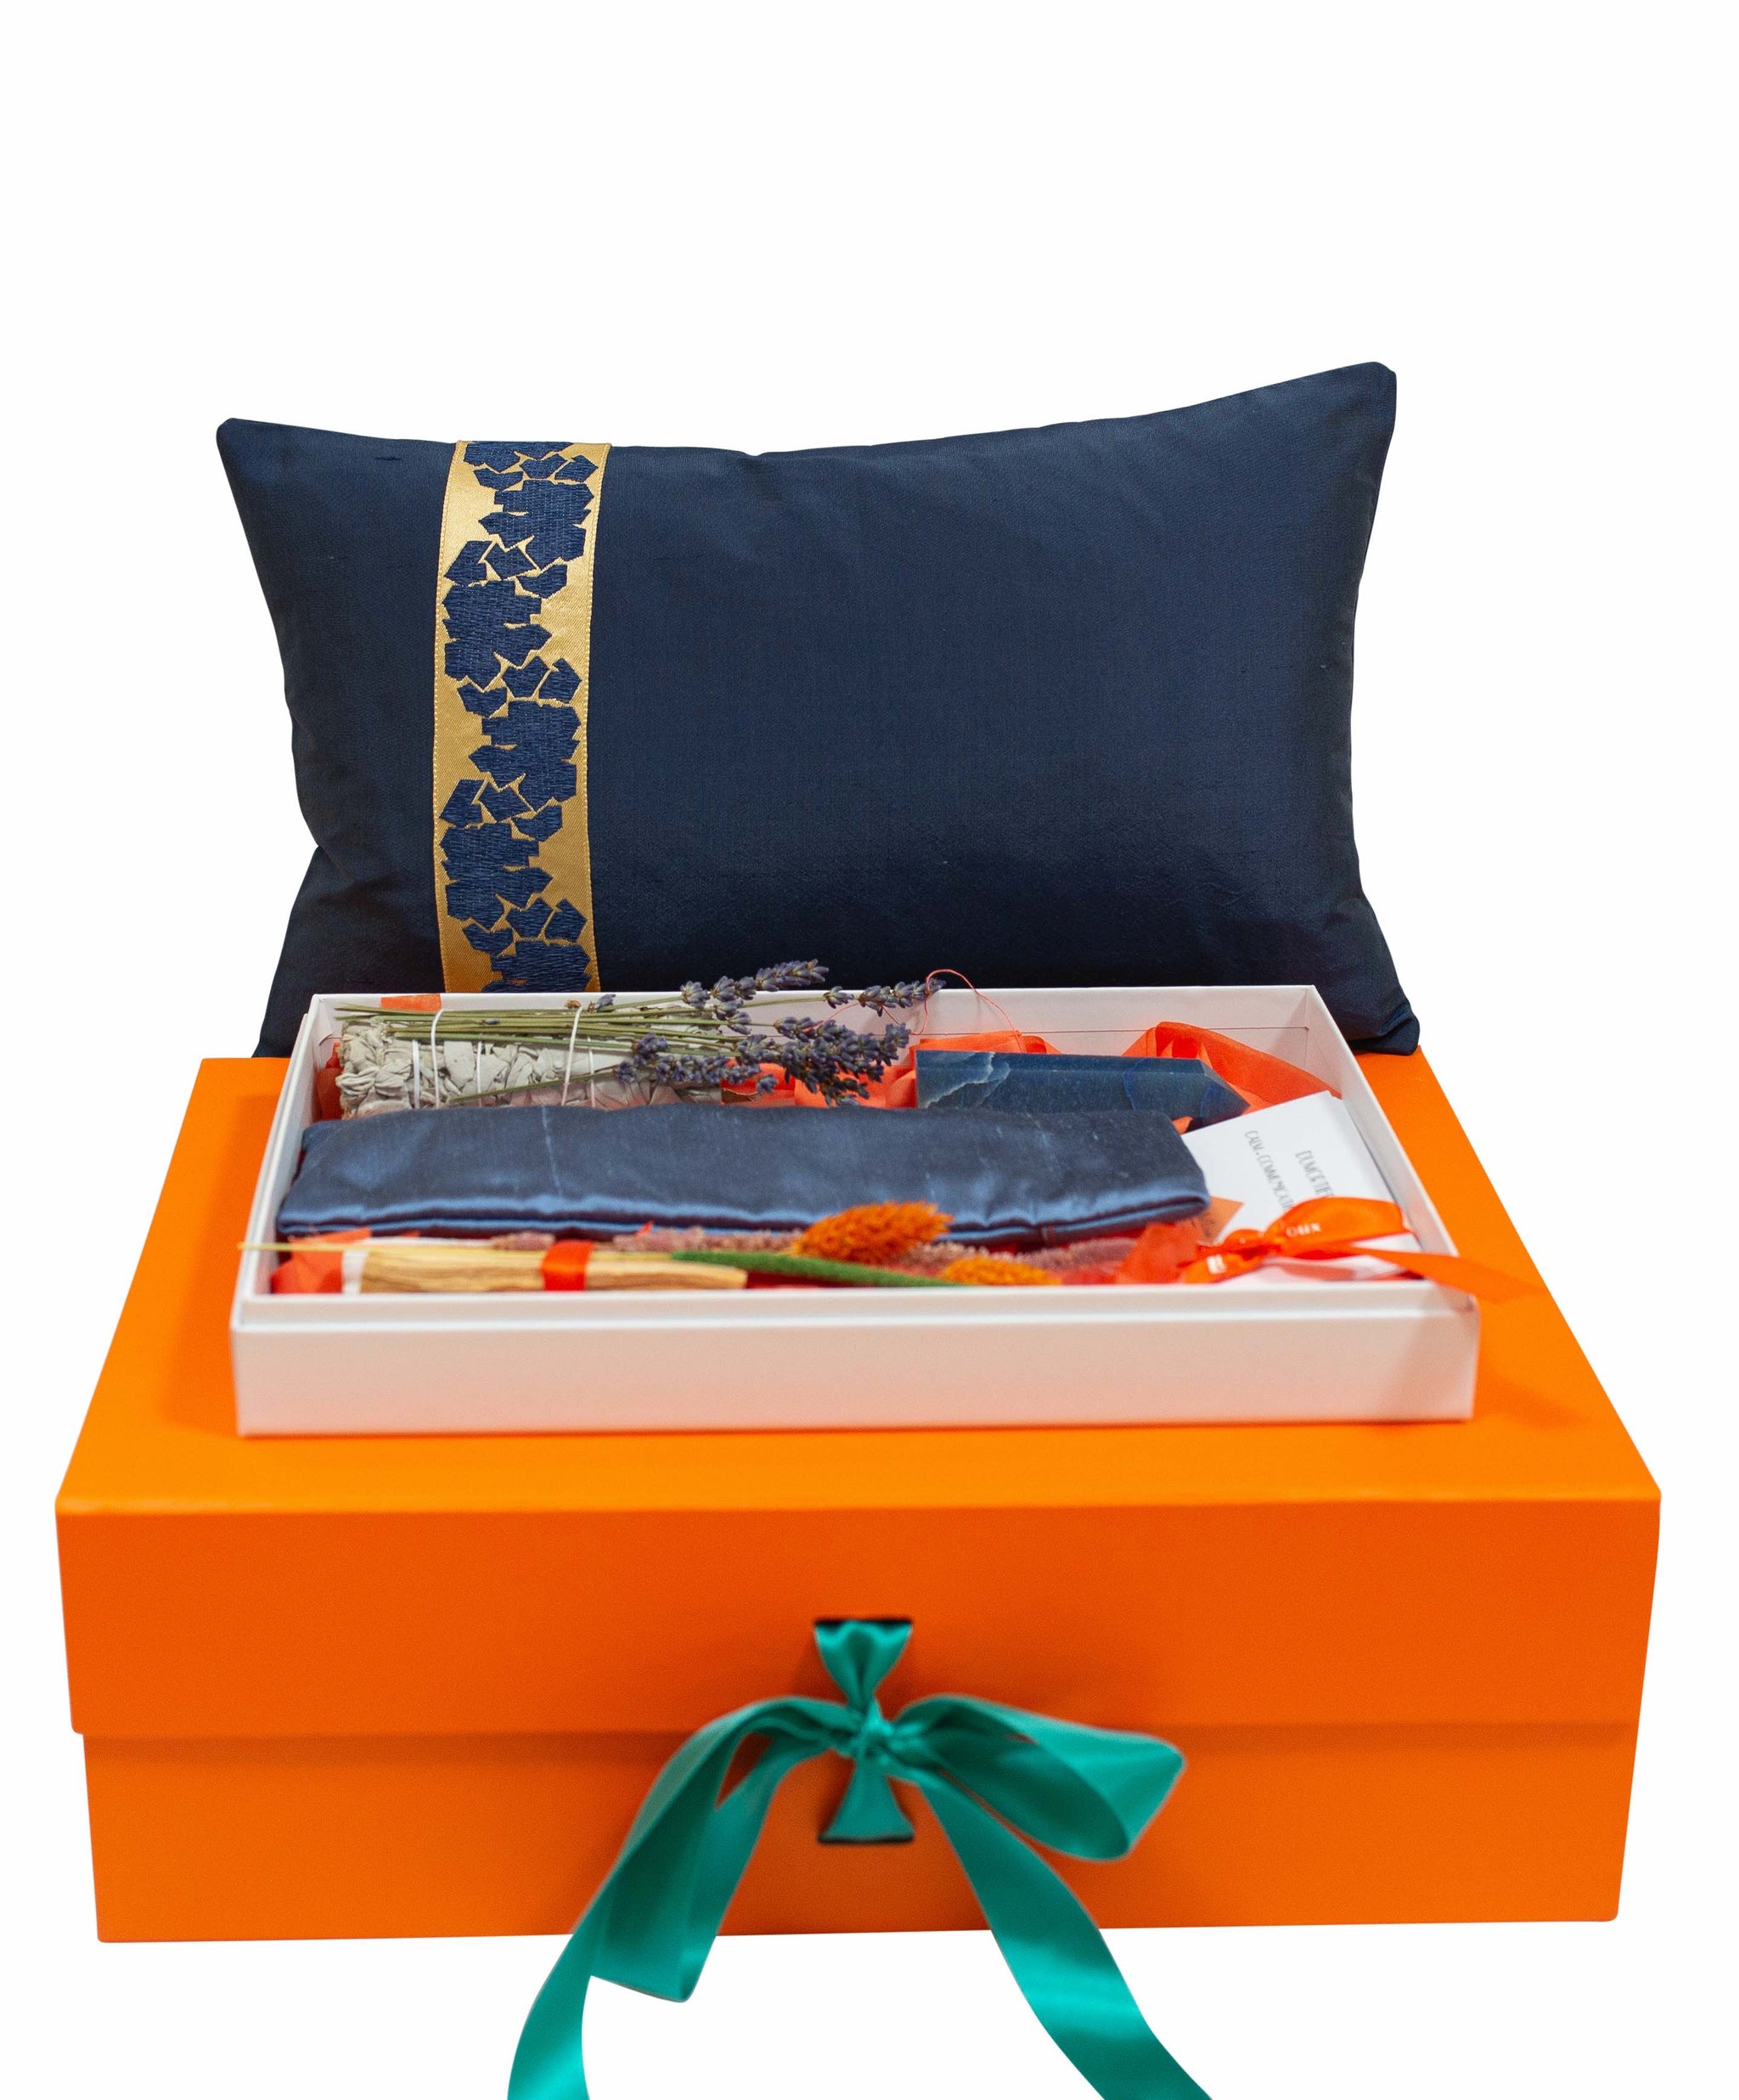 Rituel gift box with "Fragment" Wilhelm blue silk cushion set with Durmorterite